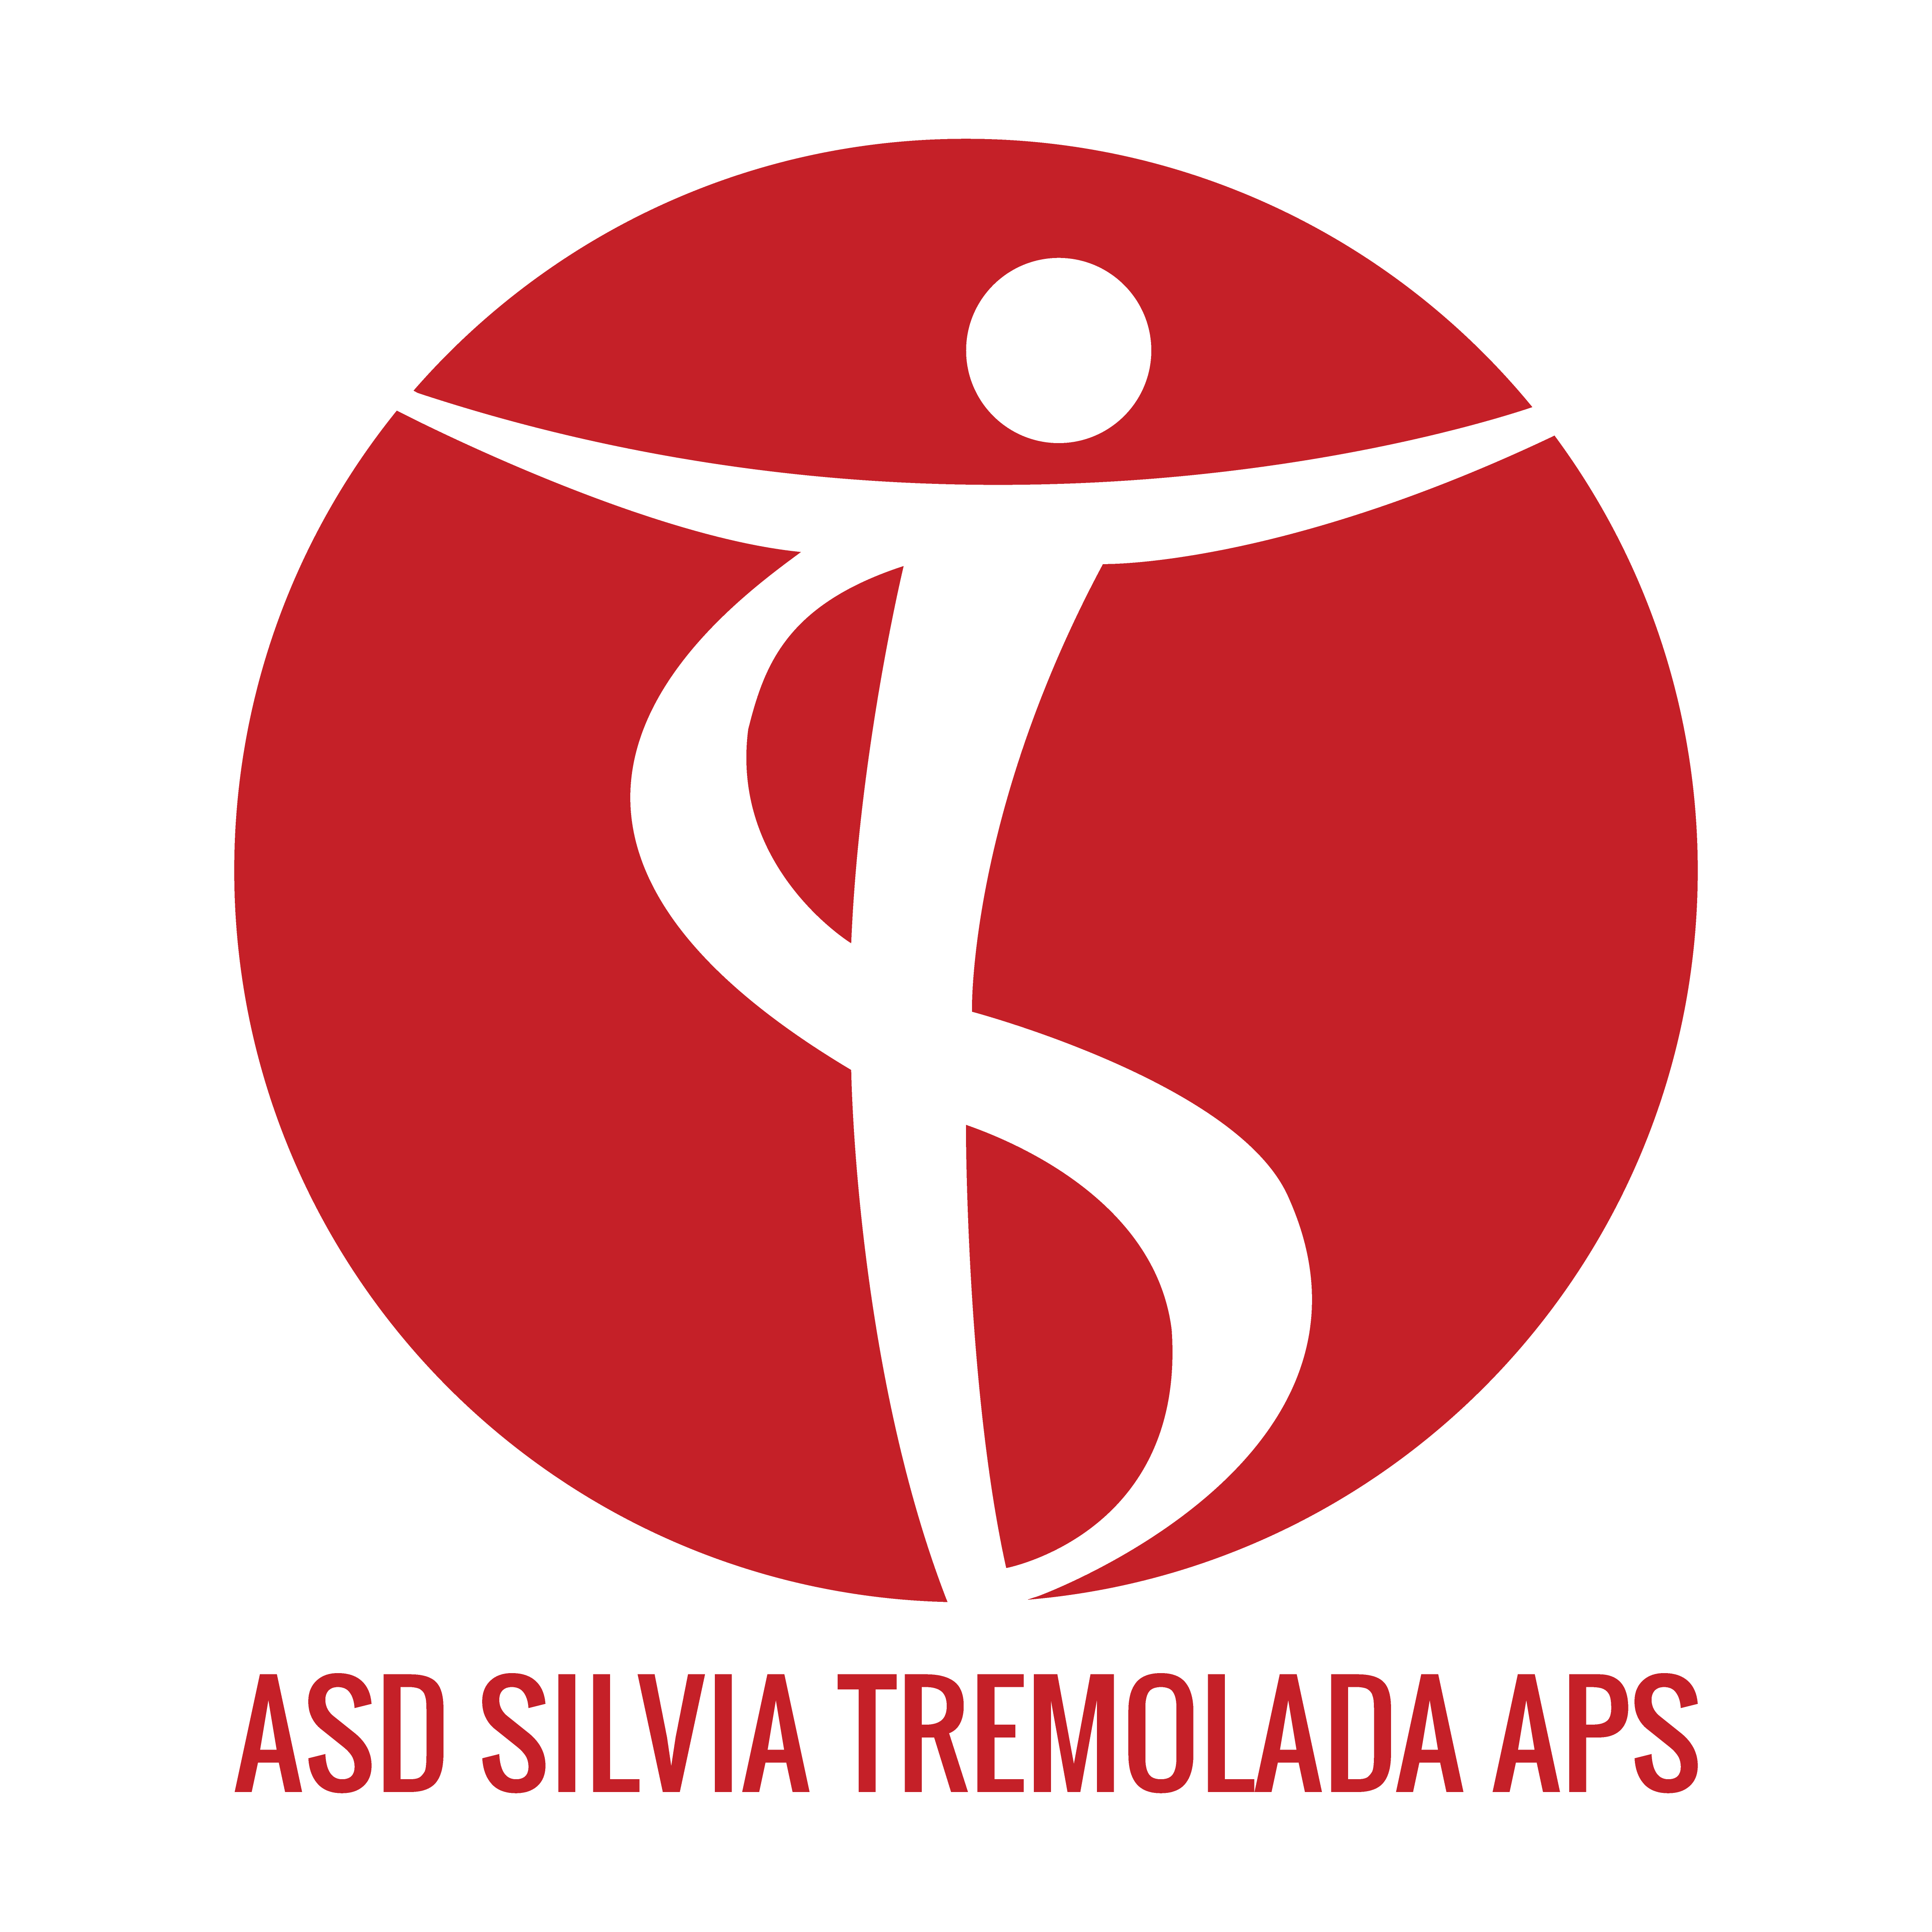 ASD Silvia Tremolada APS